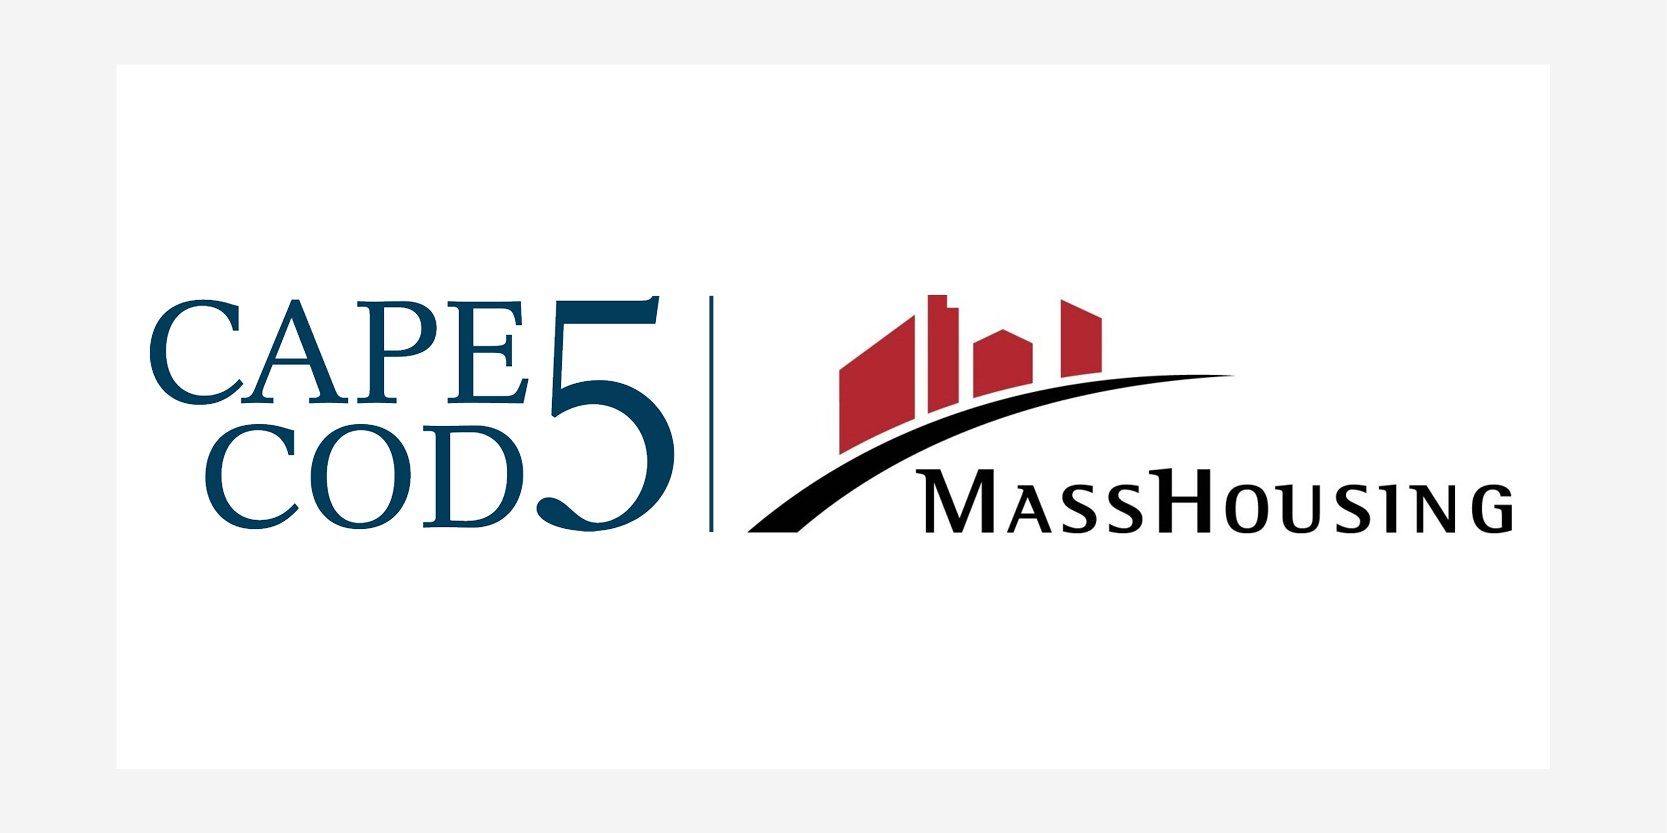 Cape Cod 5 & MassHousing logos